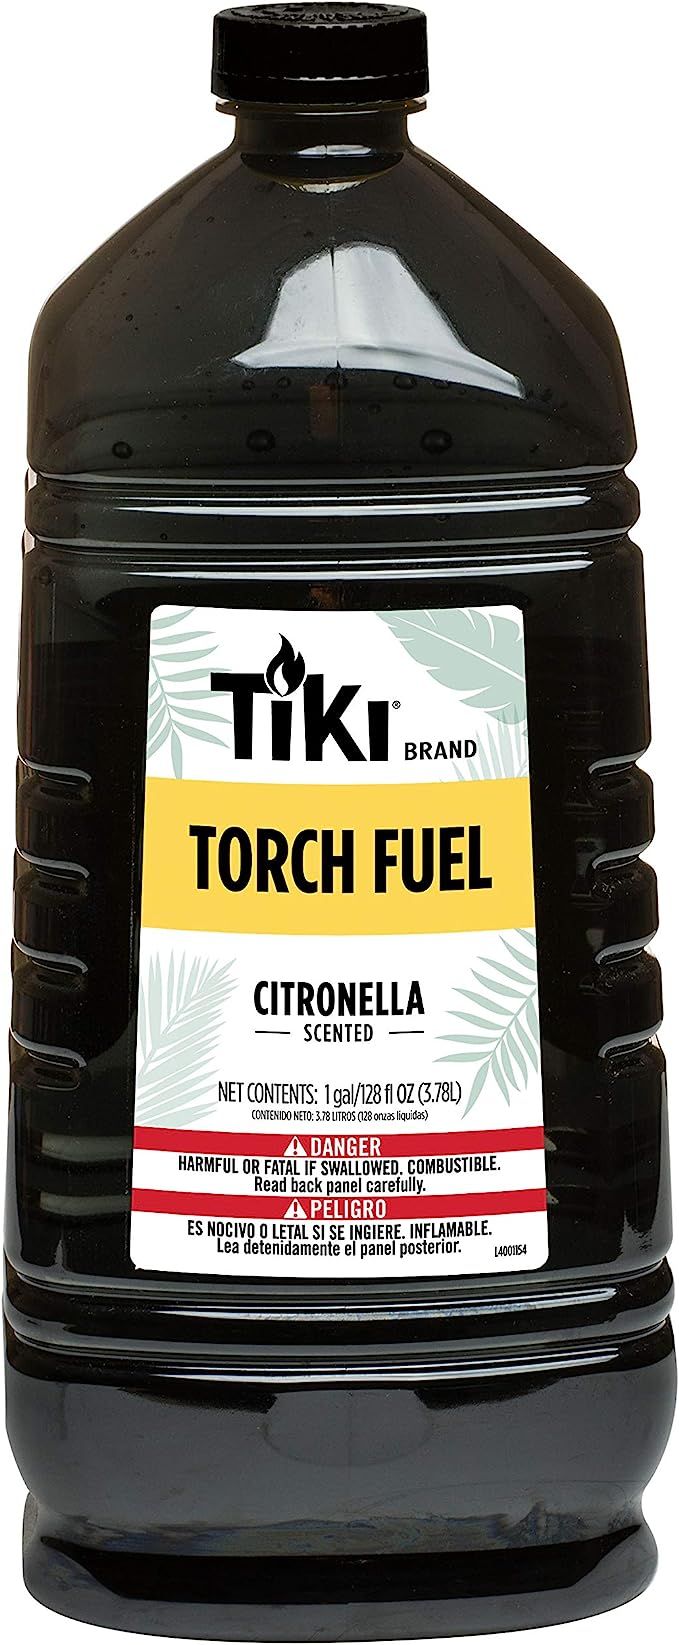 Tiki Brand Easy Pour Tiki Torch Fuel for Outdoors, Citronella Scented - 128 oz, 1216151 | Amazon (US)